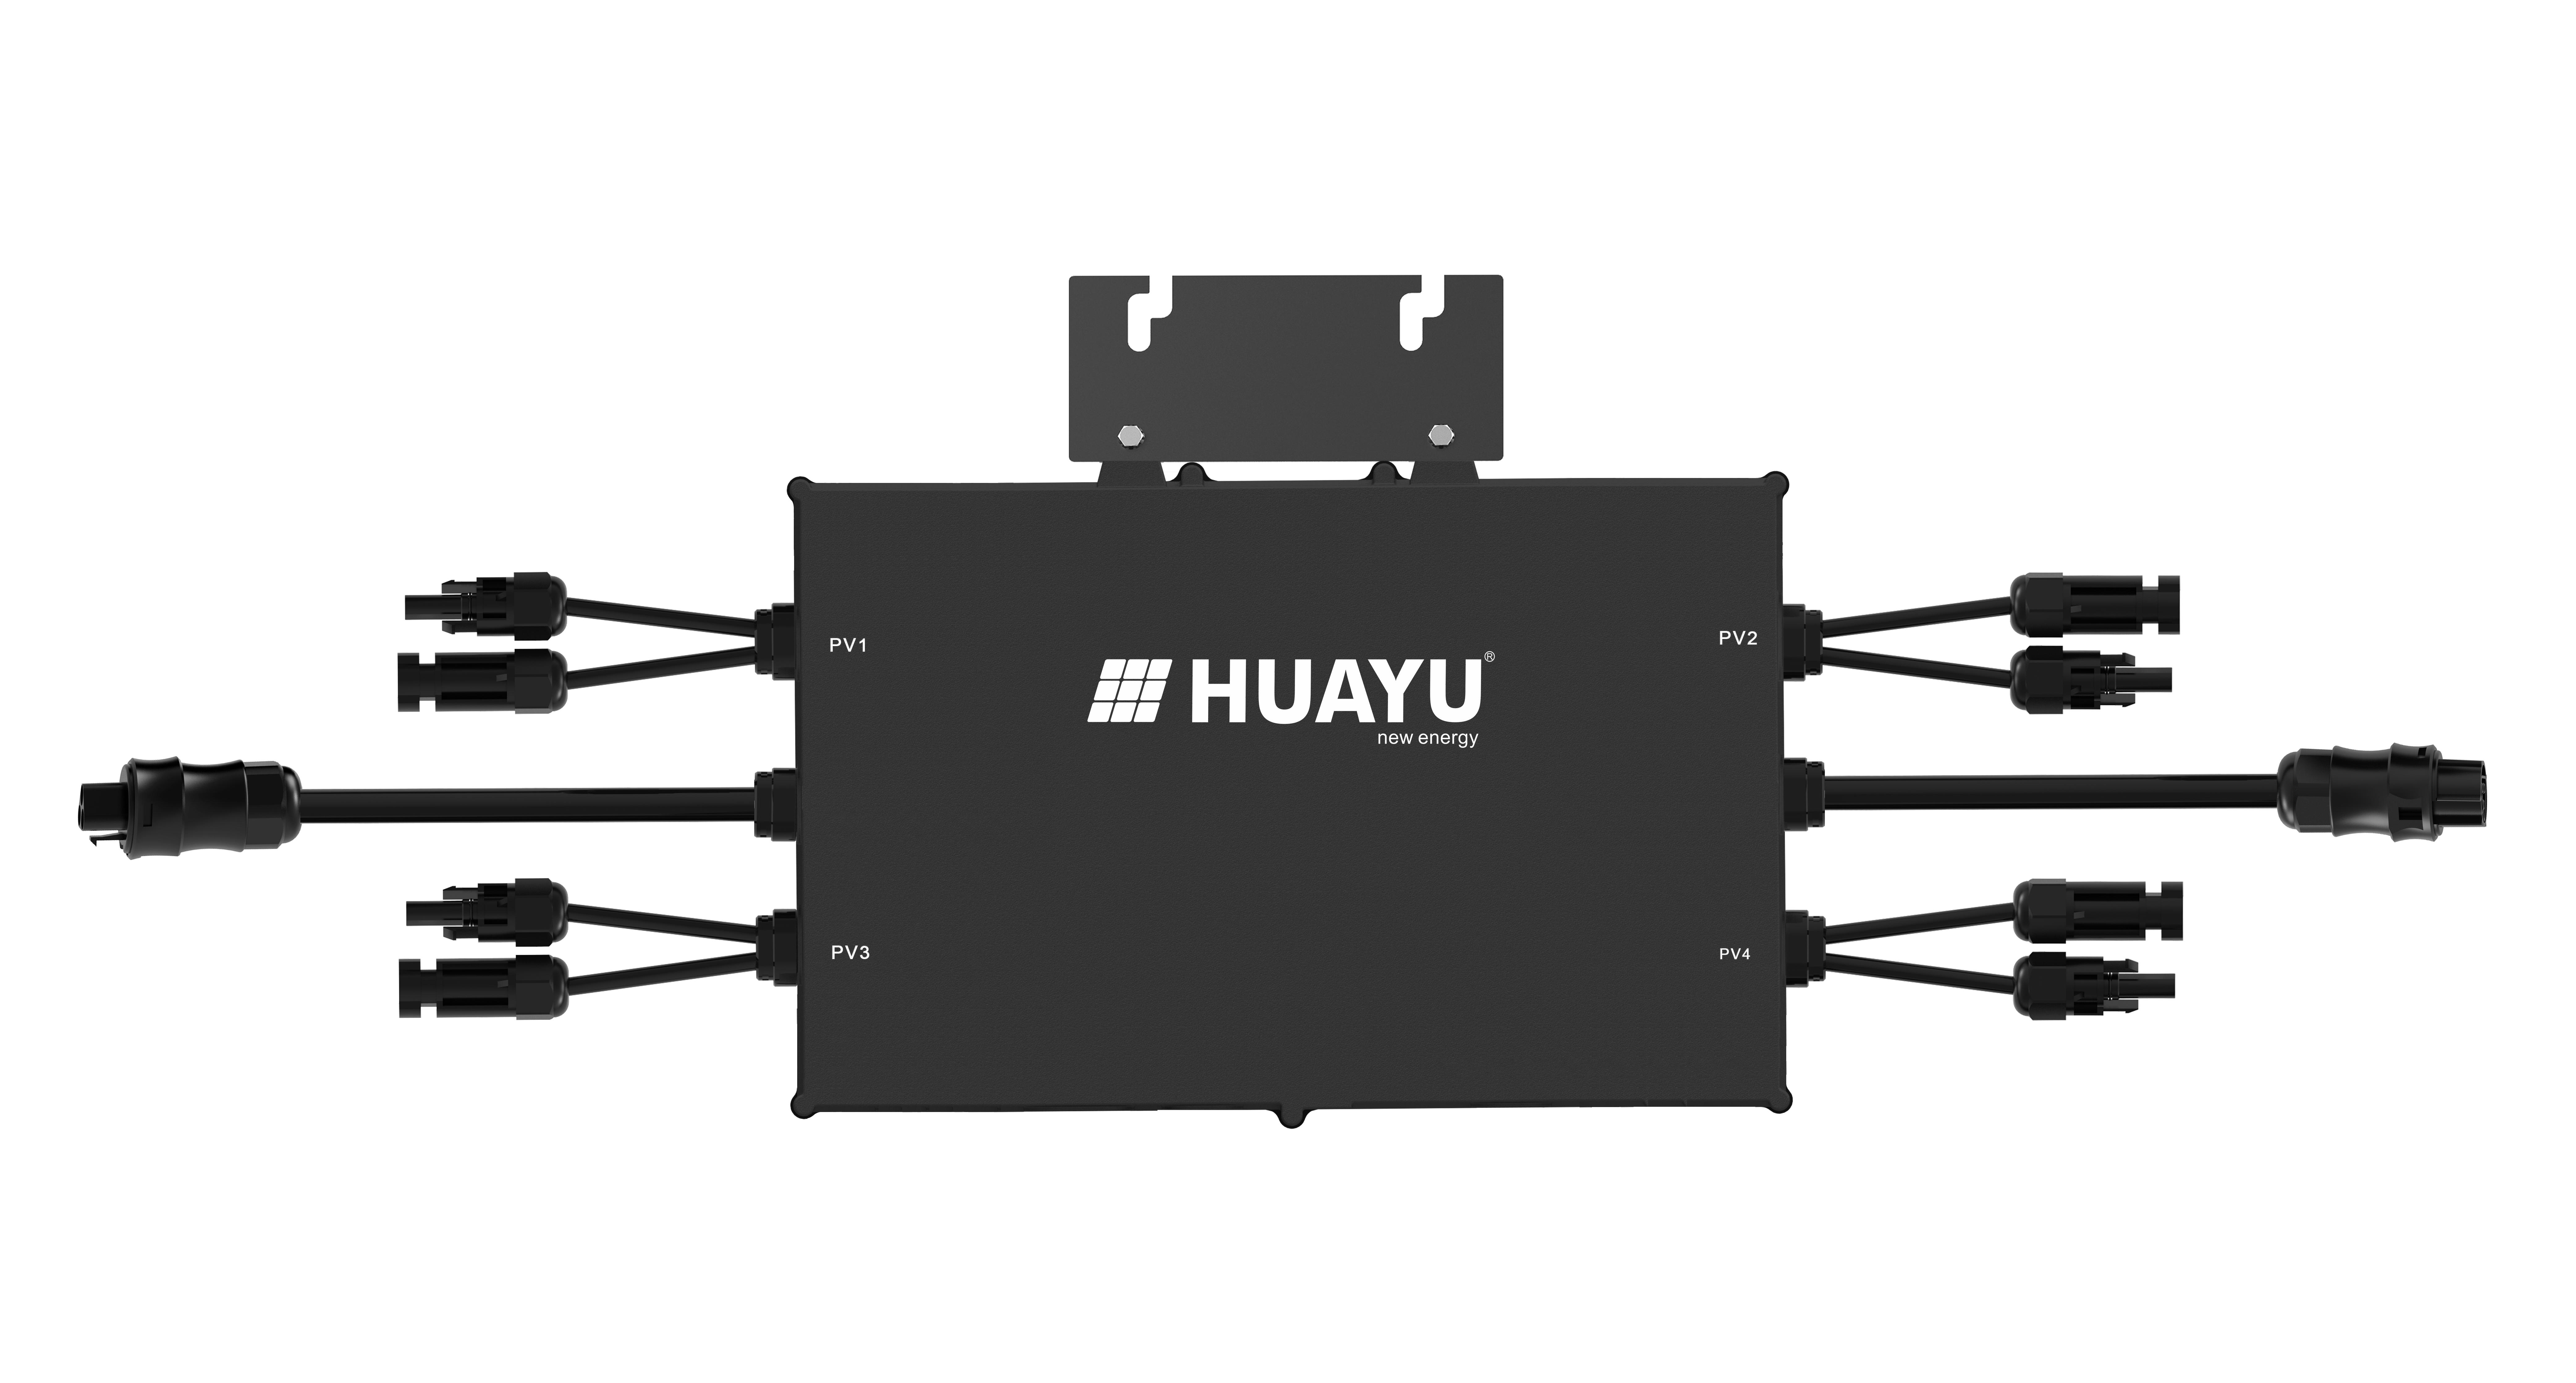 Huayu HY-2000-Plus Wechselrichter